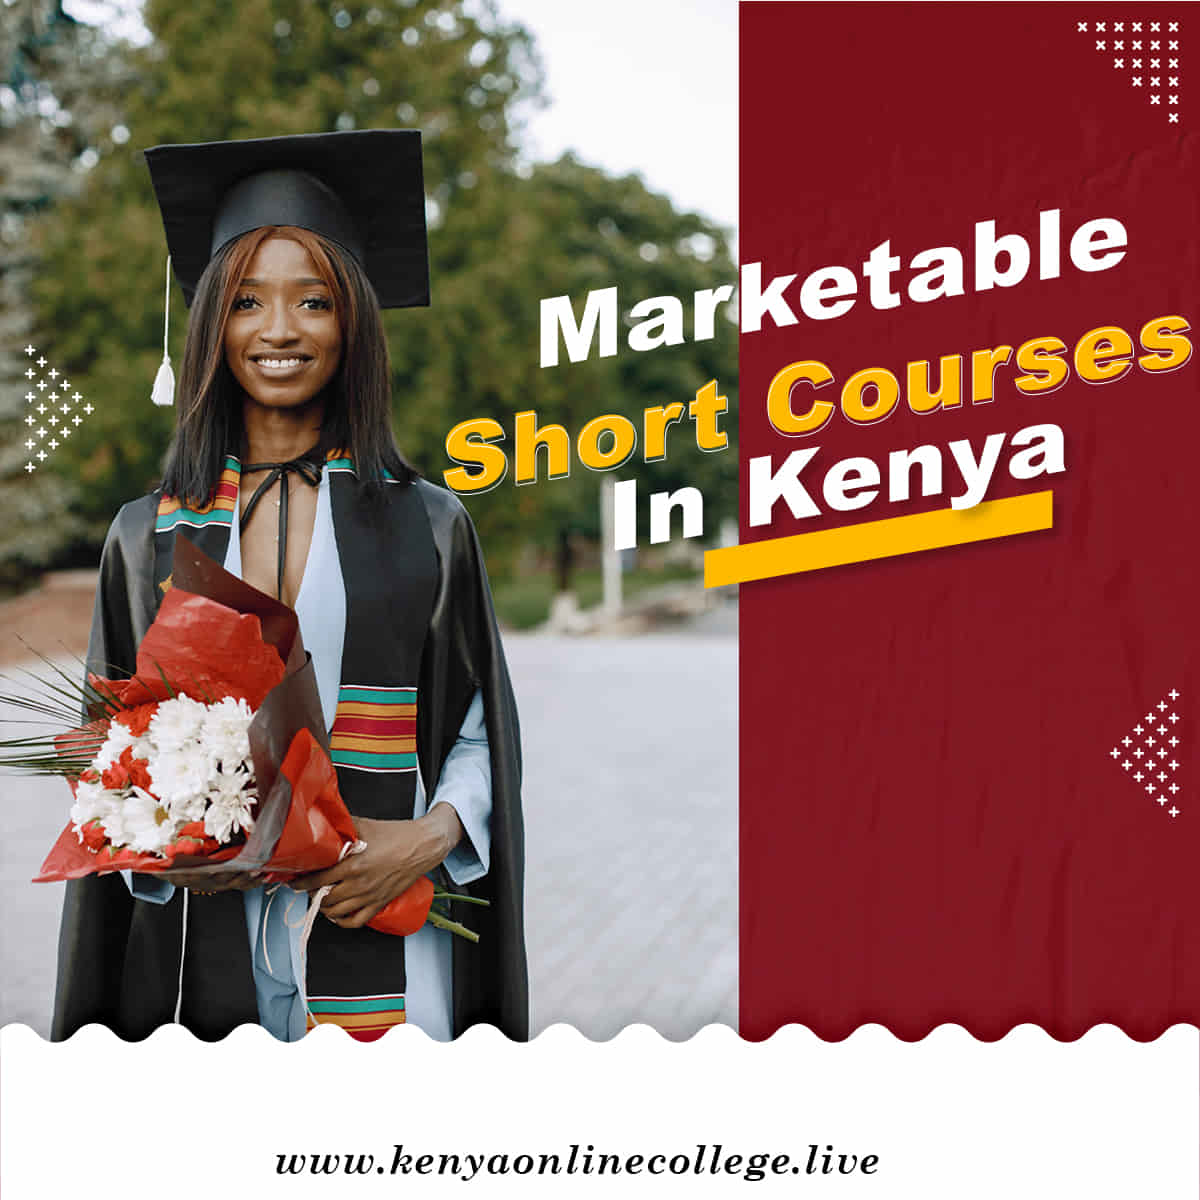 Marketable short courses in Kenya